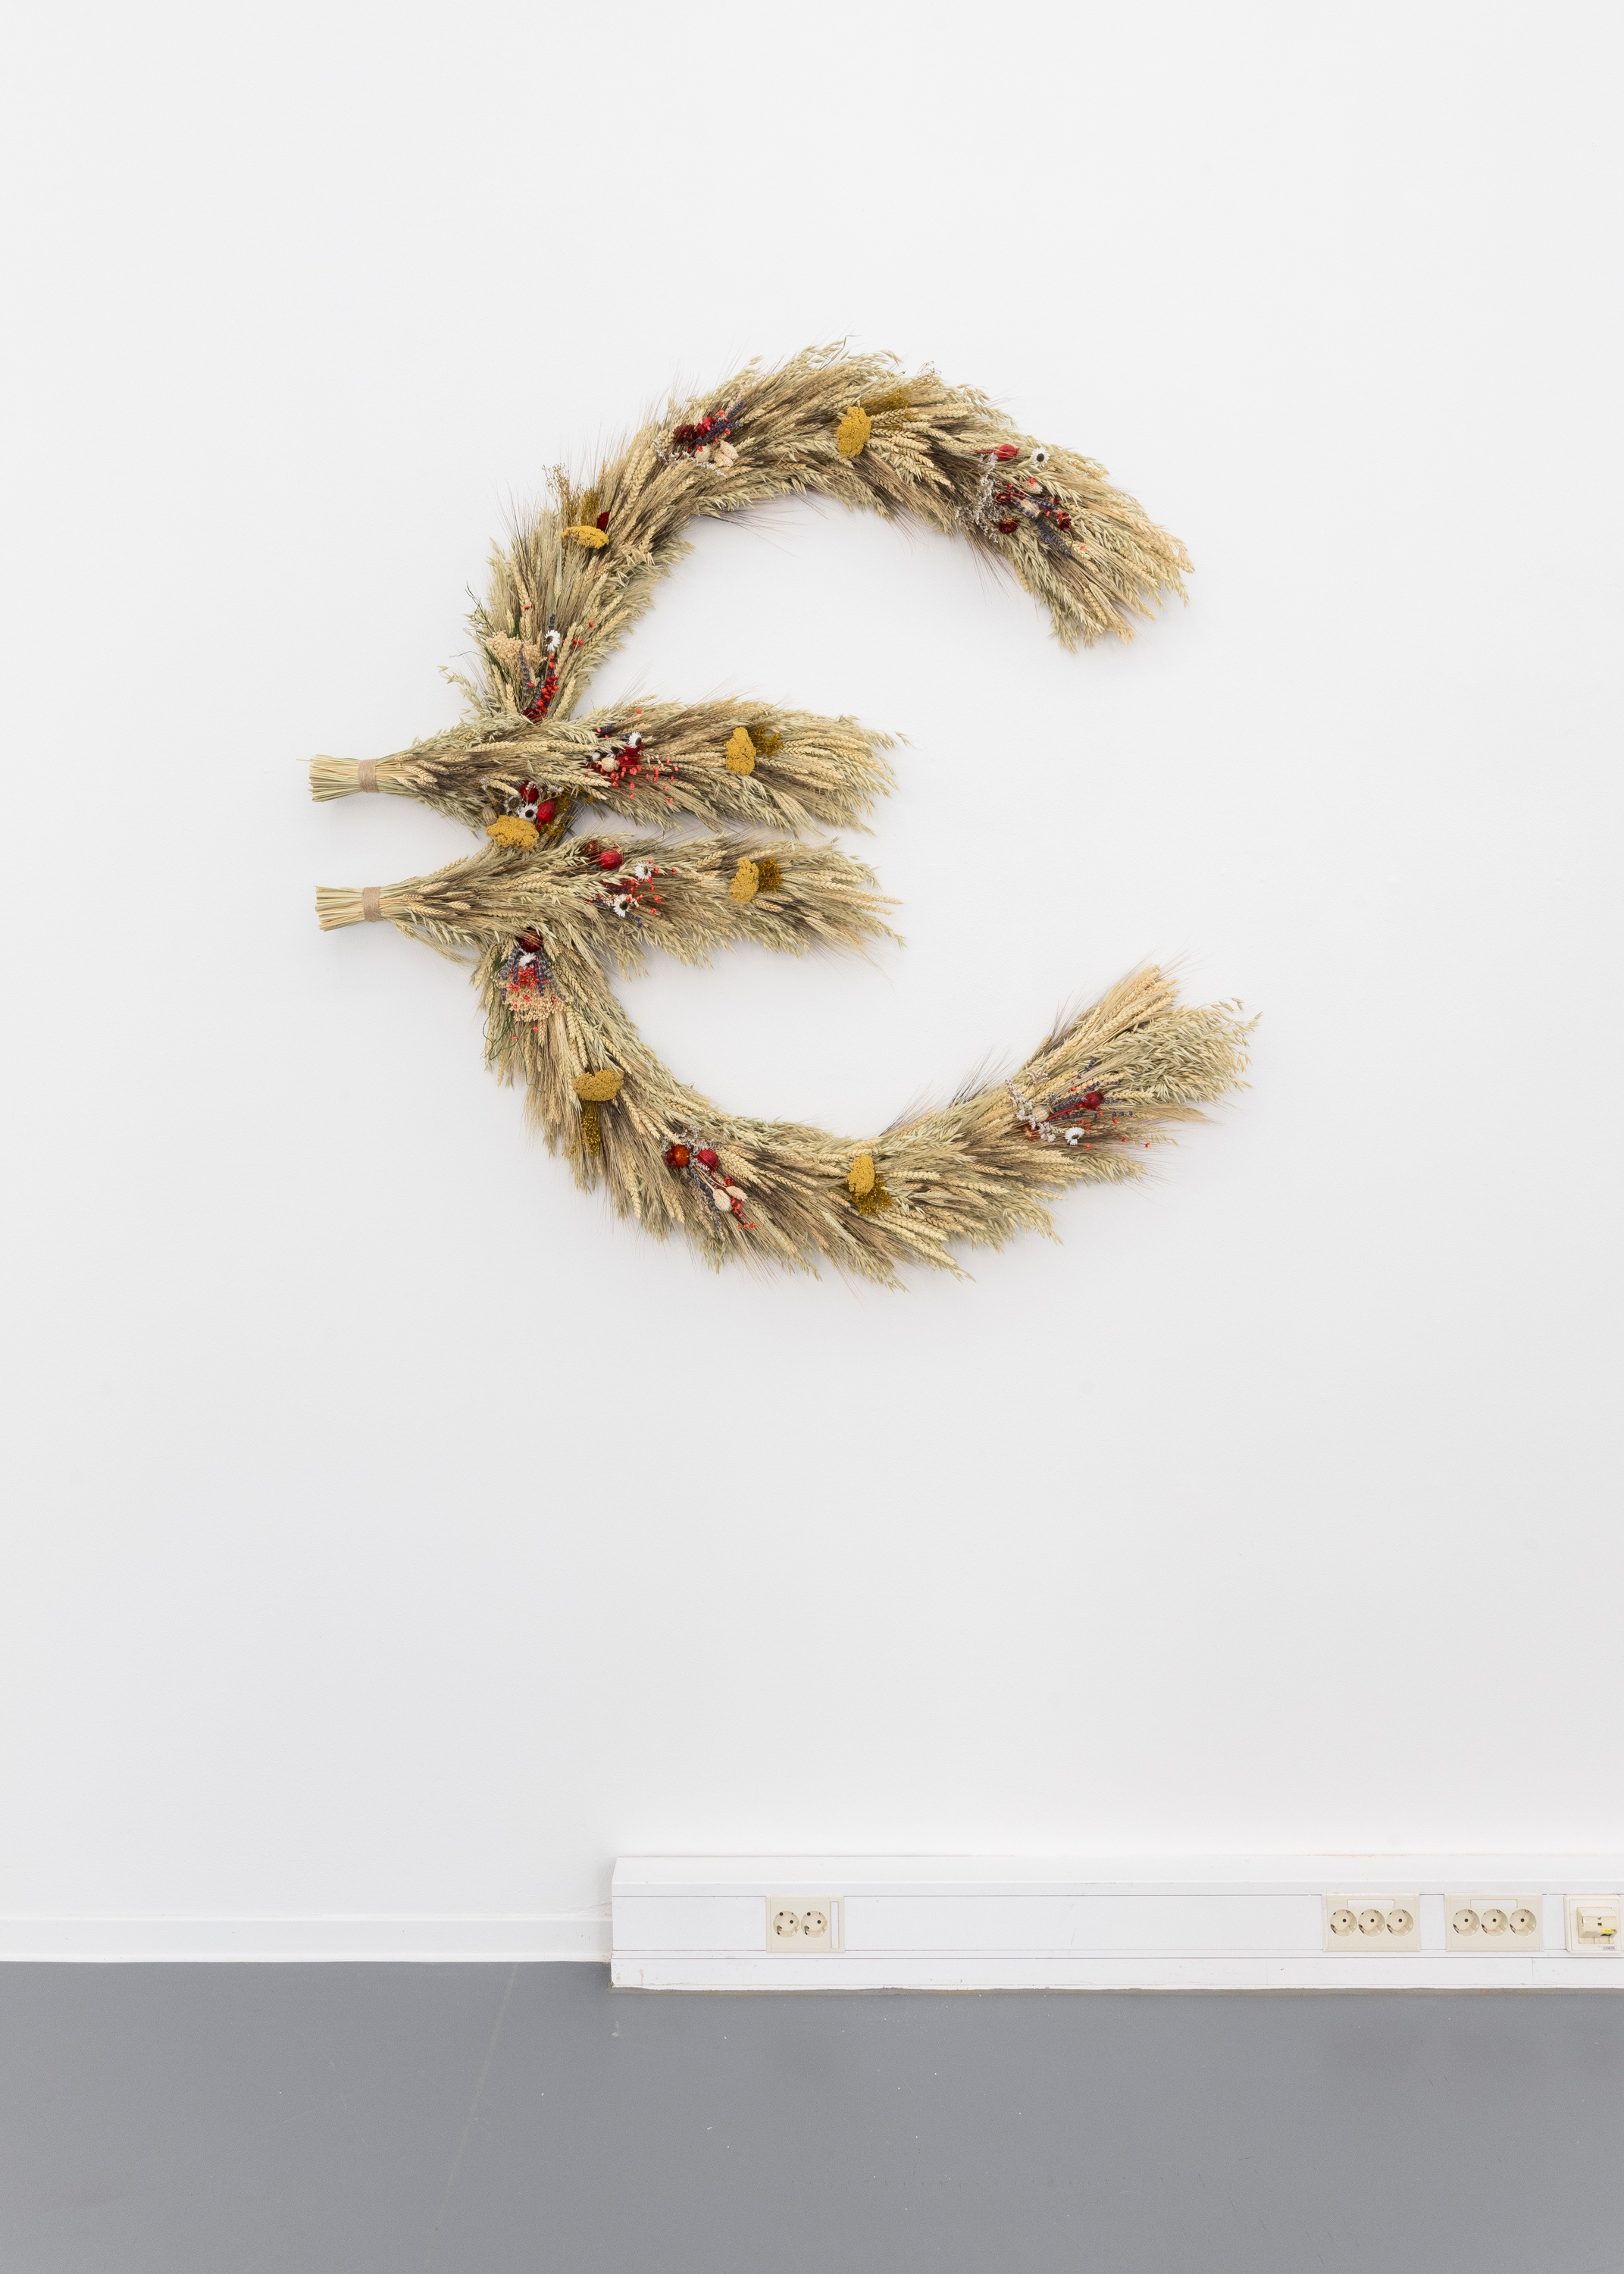 Anna Raczynska, Future Primitive, 2021. Wheat, dried flowers, steel, 130 x 140 x 20 cm © 2024 nova space of Bauhaus-Universität Weimar, courtesy of the artist, photo: Jannis Uffrecht